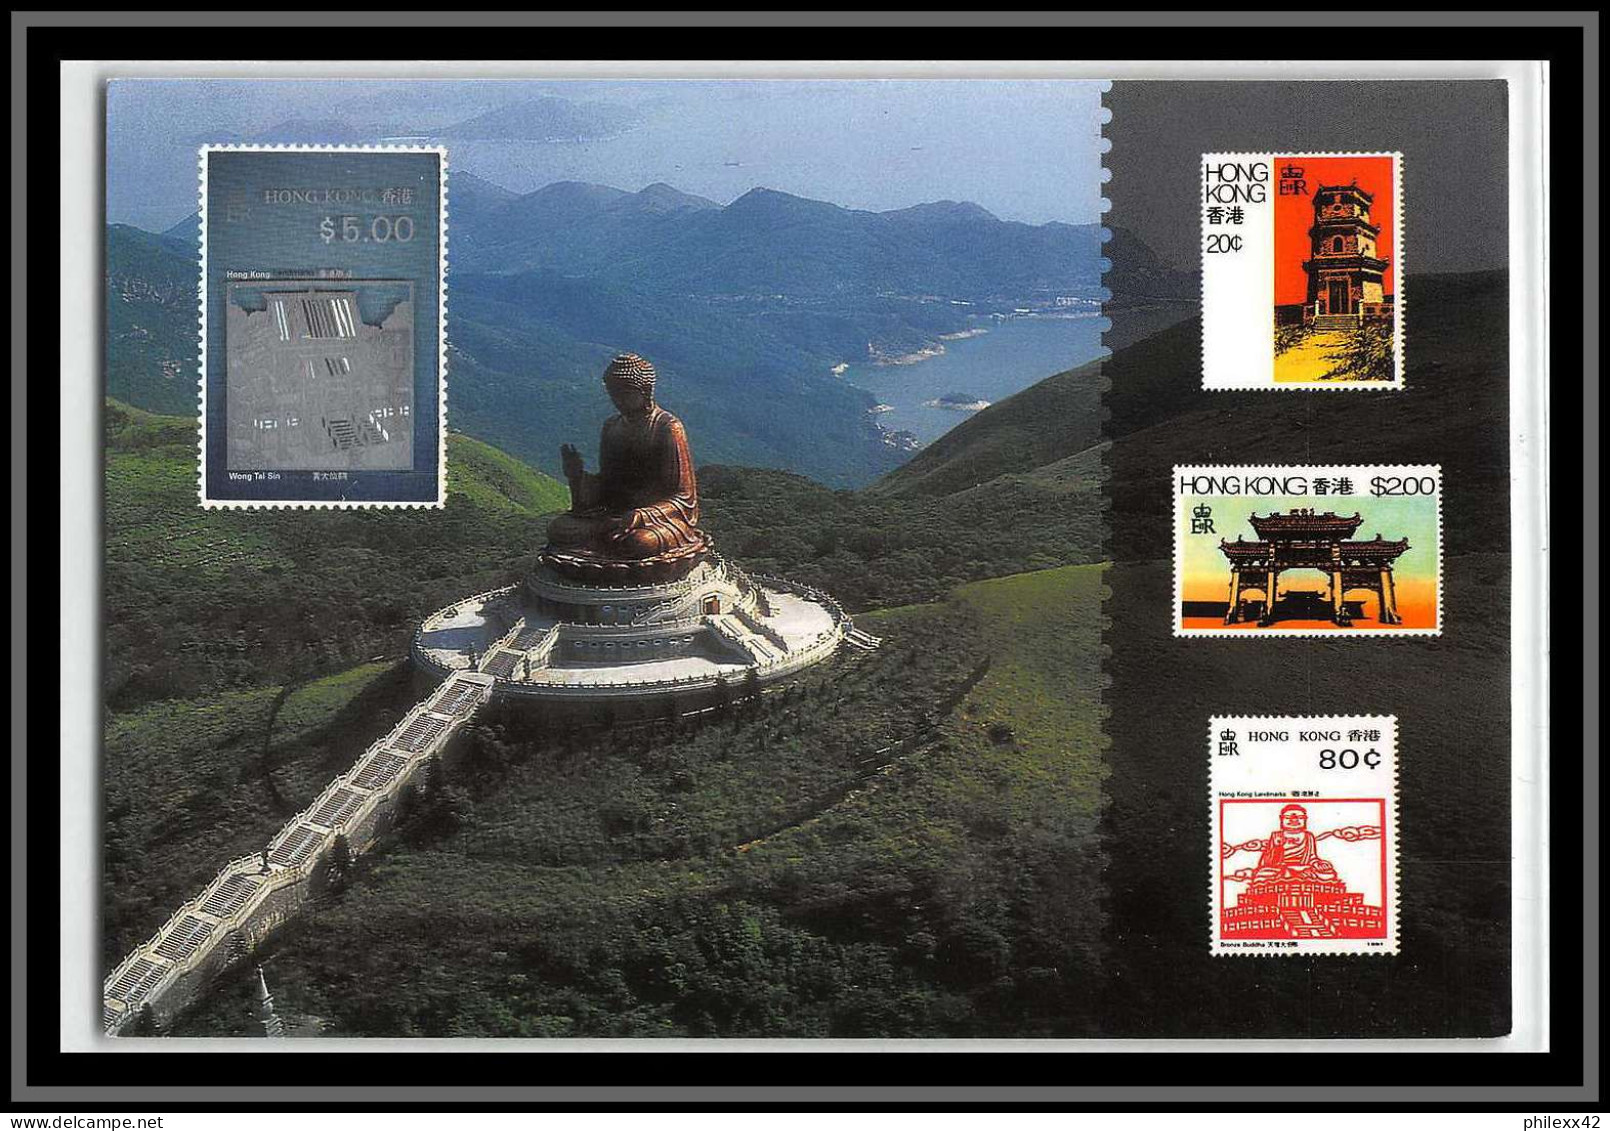 49166 Hong Kong 97 Stamp Exhibition 1997 By Air Mail Par Avion China Entier Carte Postal Postcard Stationery Silver - Ganzsachen